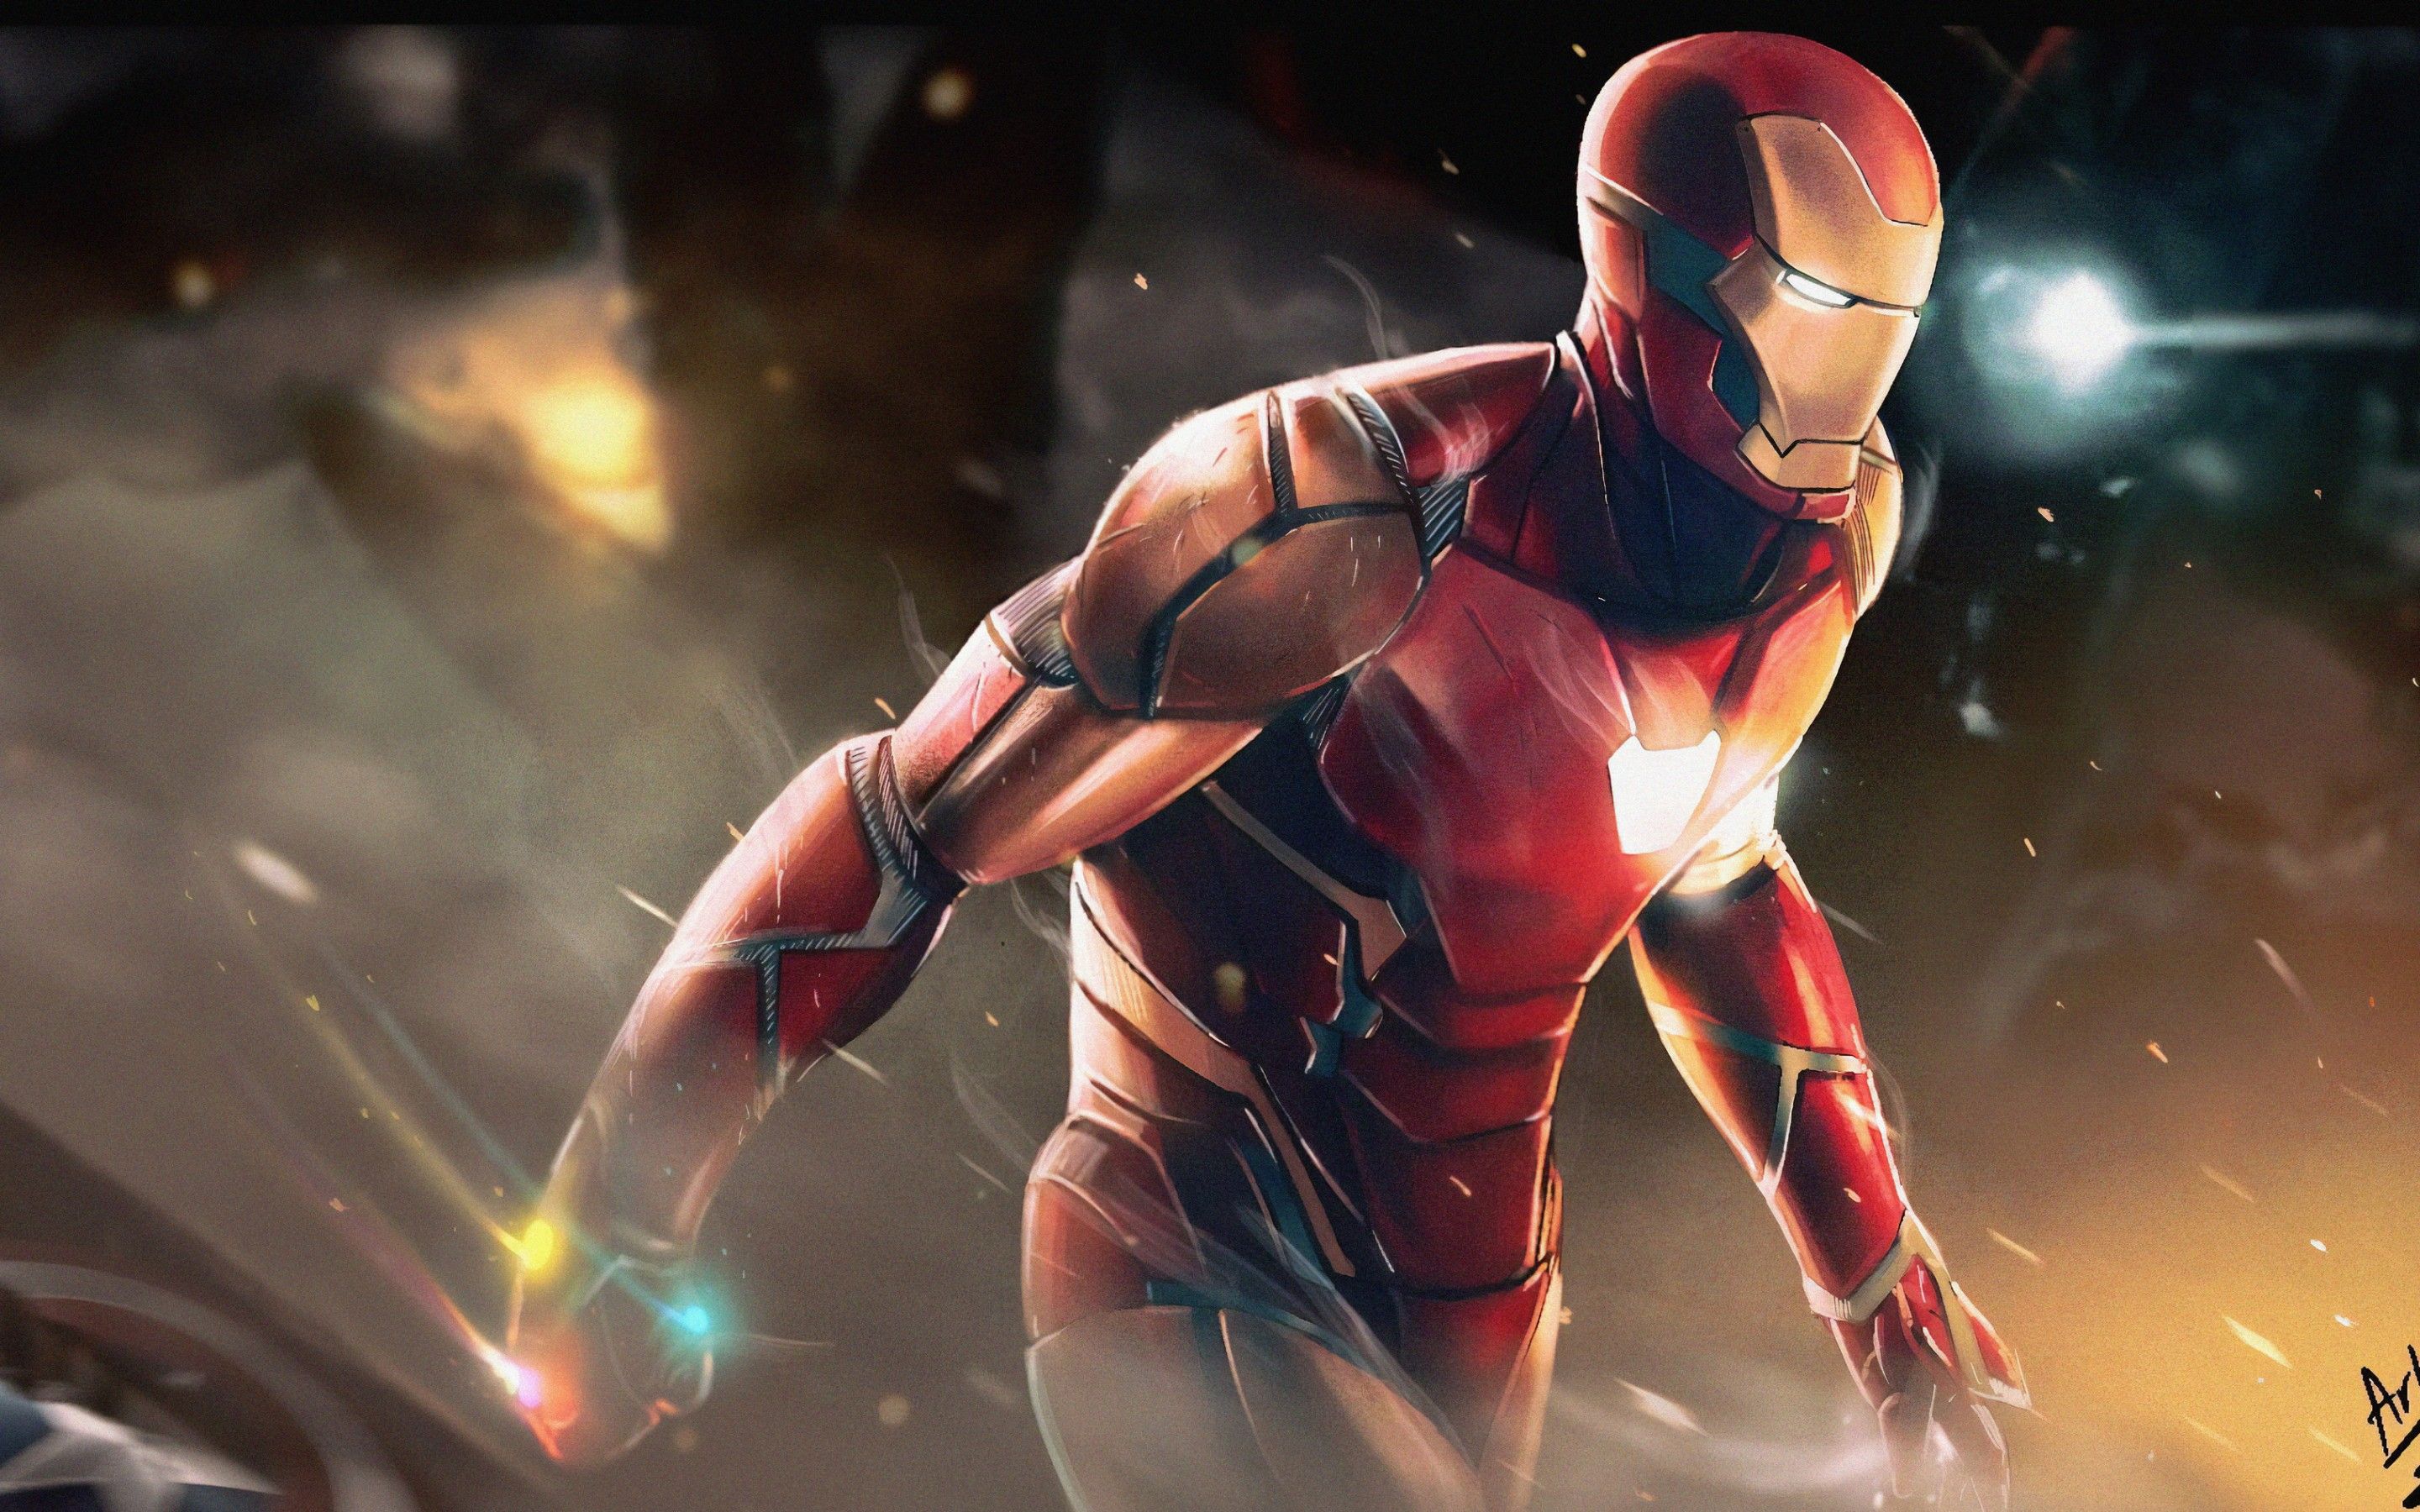 Wallpaper Iron Man, Infinity Gauntlet, Avengers: Endgame, Artwork, 4K, Creative Graphics,. Wallpaper for iPhone, Android, Mobile and Desktop